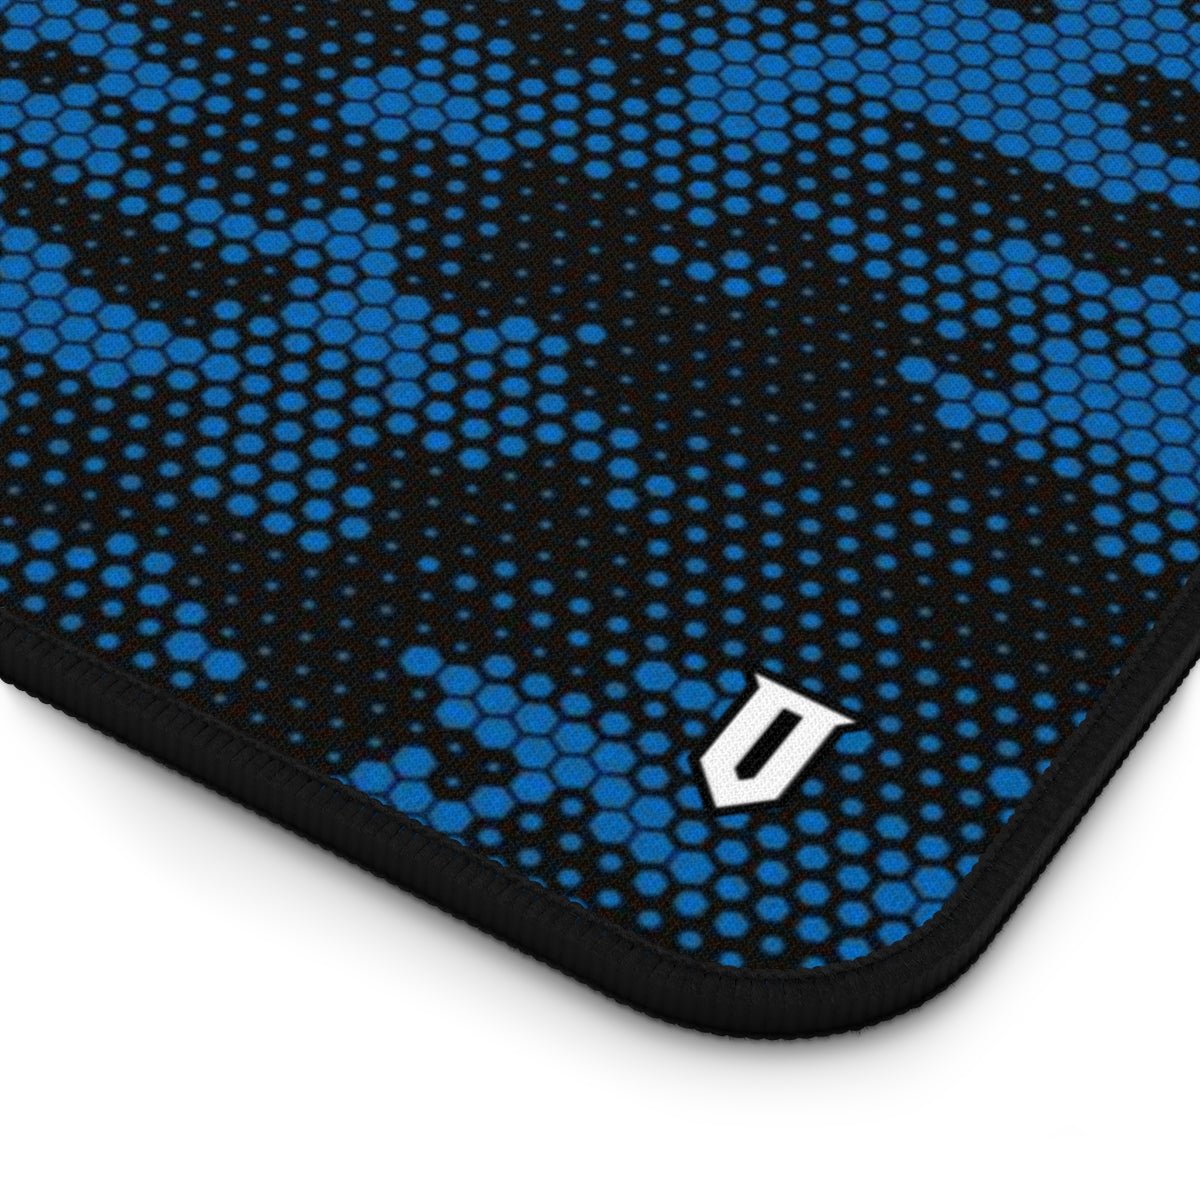 Blue Hexagonal Camo Mousepad - Optimus